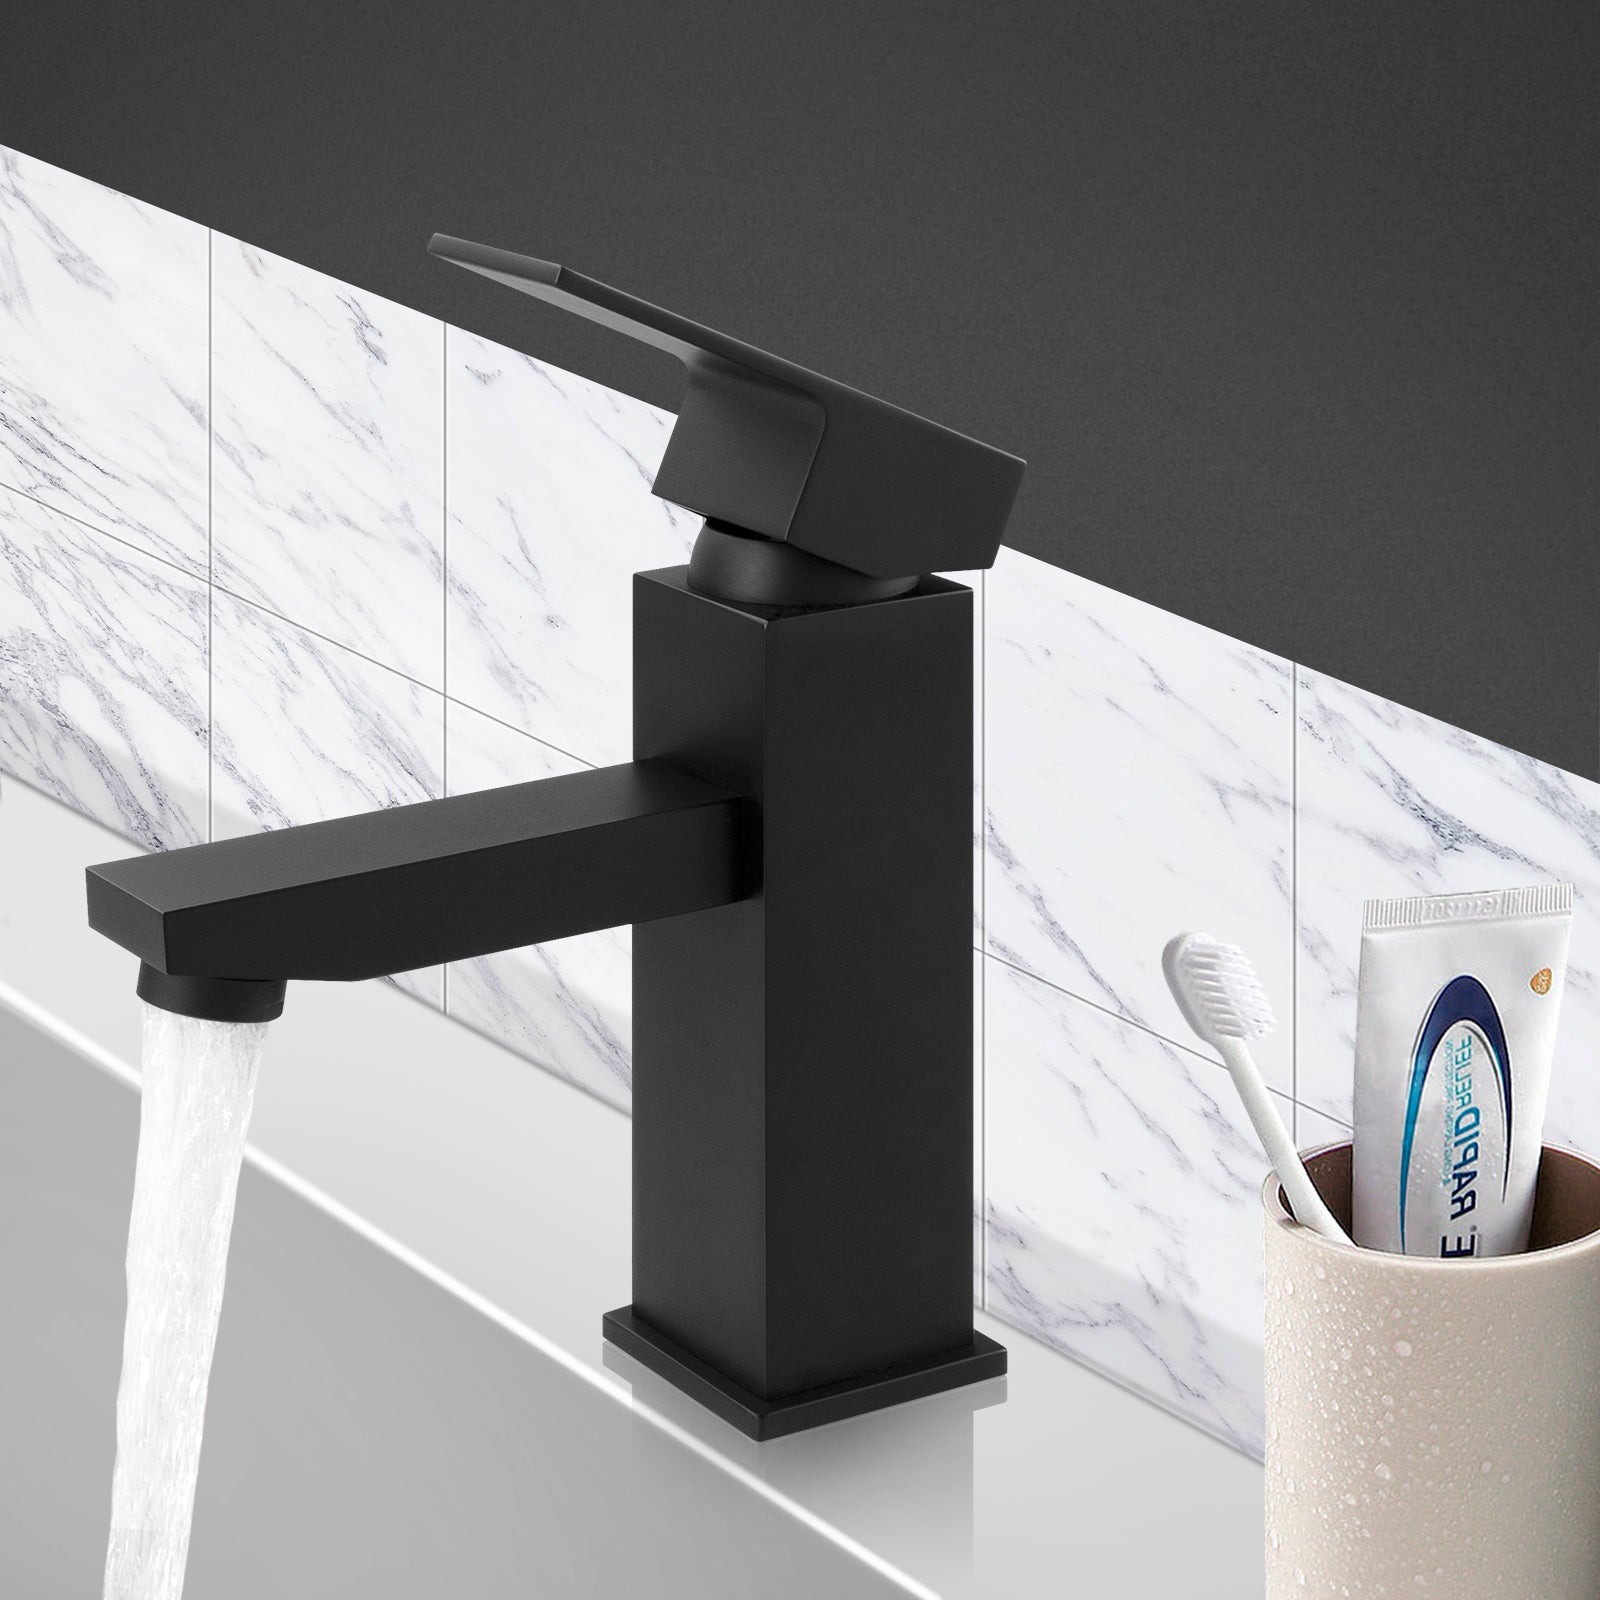 ACA Matte Black Bathroom Tap Square Mixer Taps Sink Basin Faucet WELS